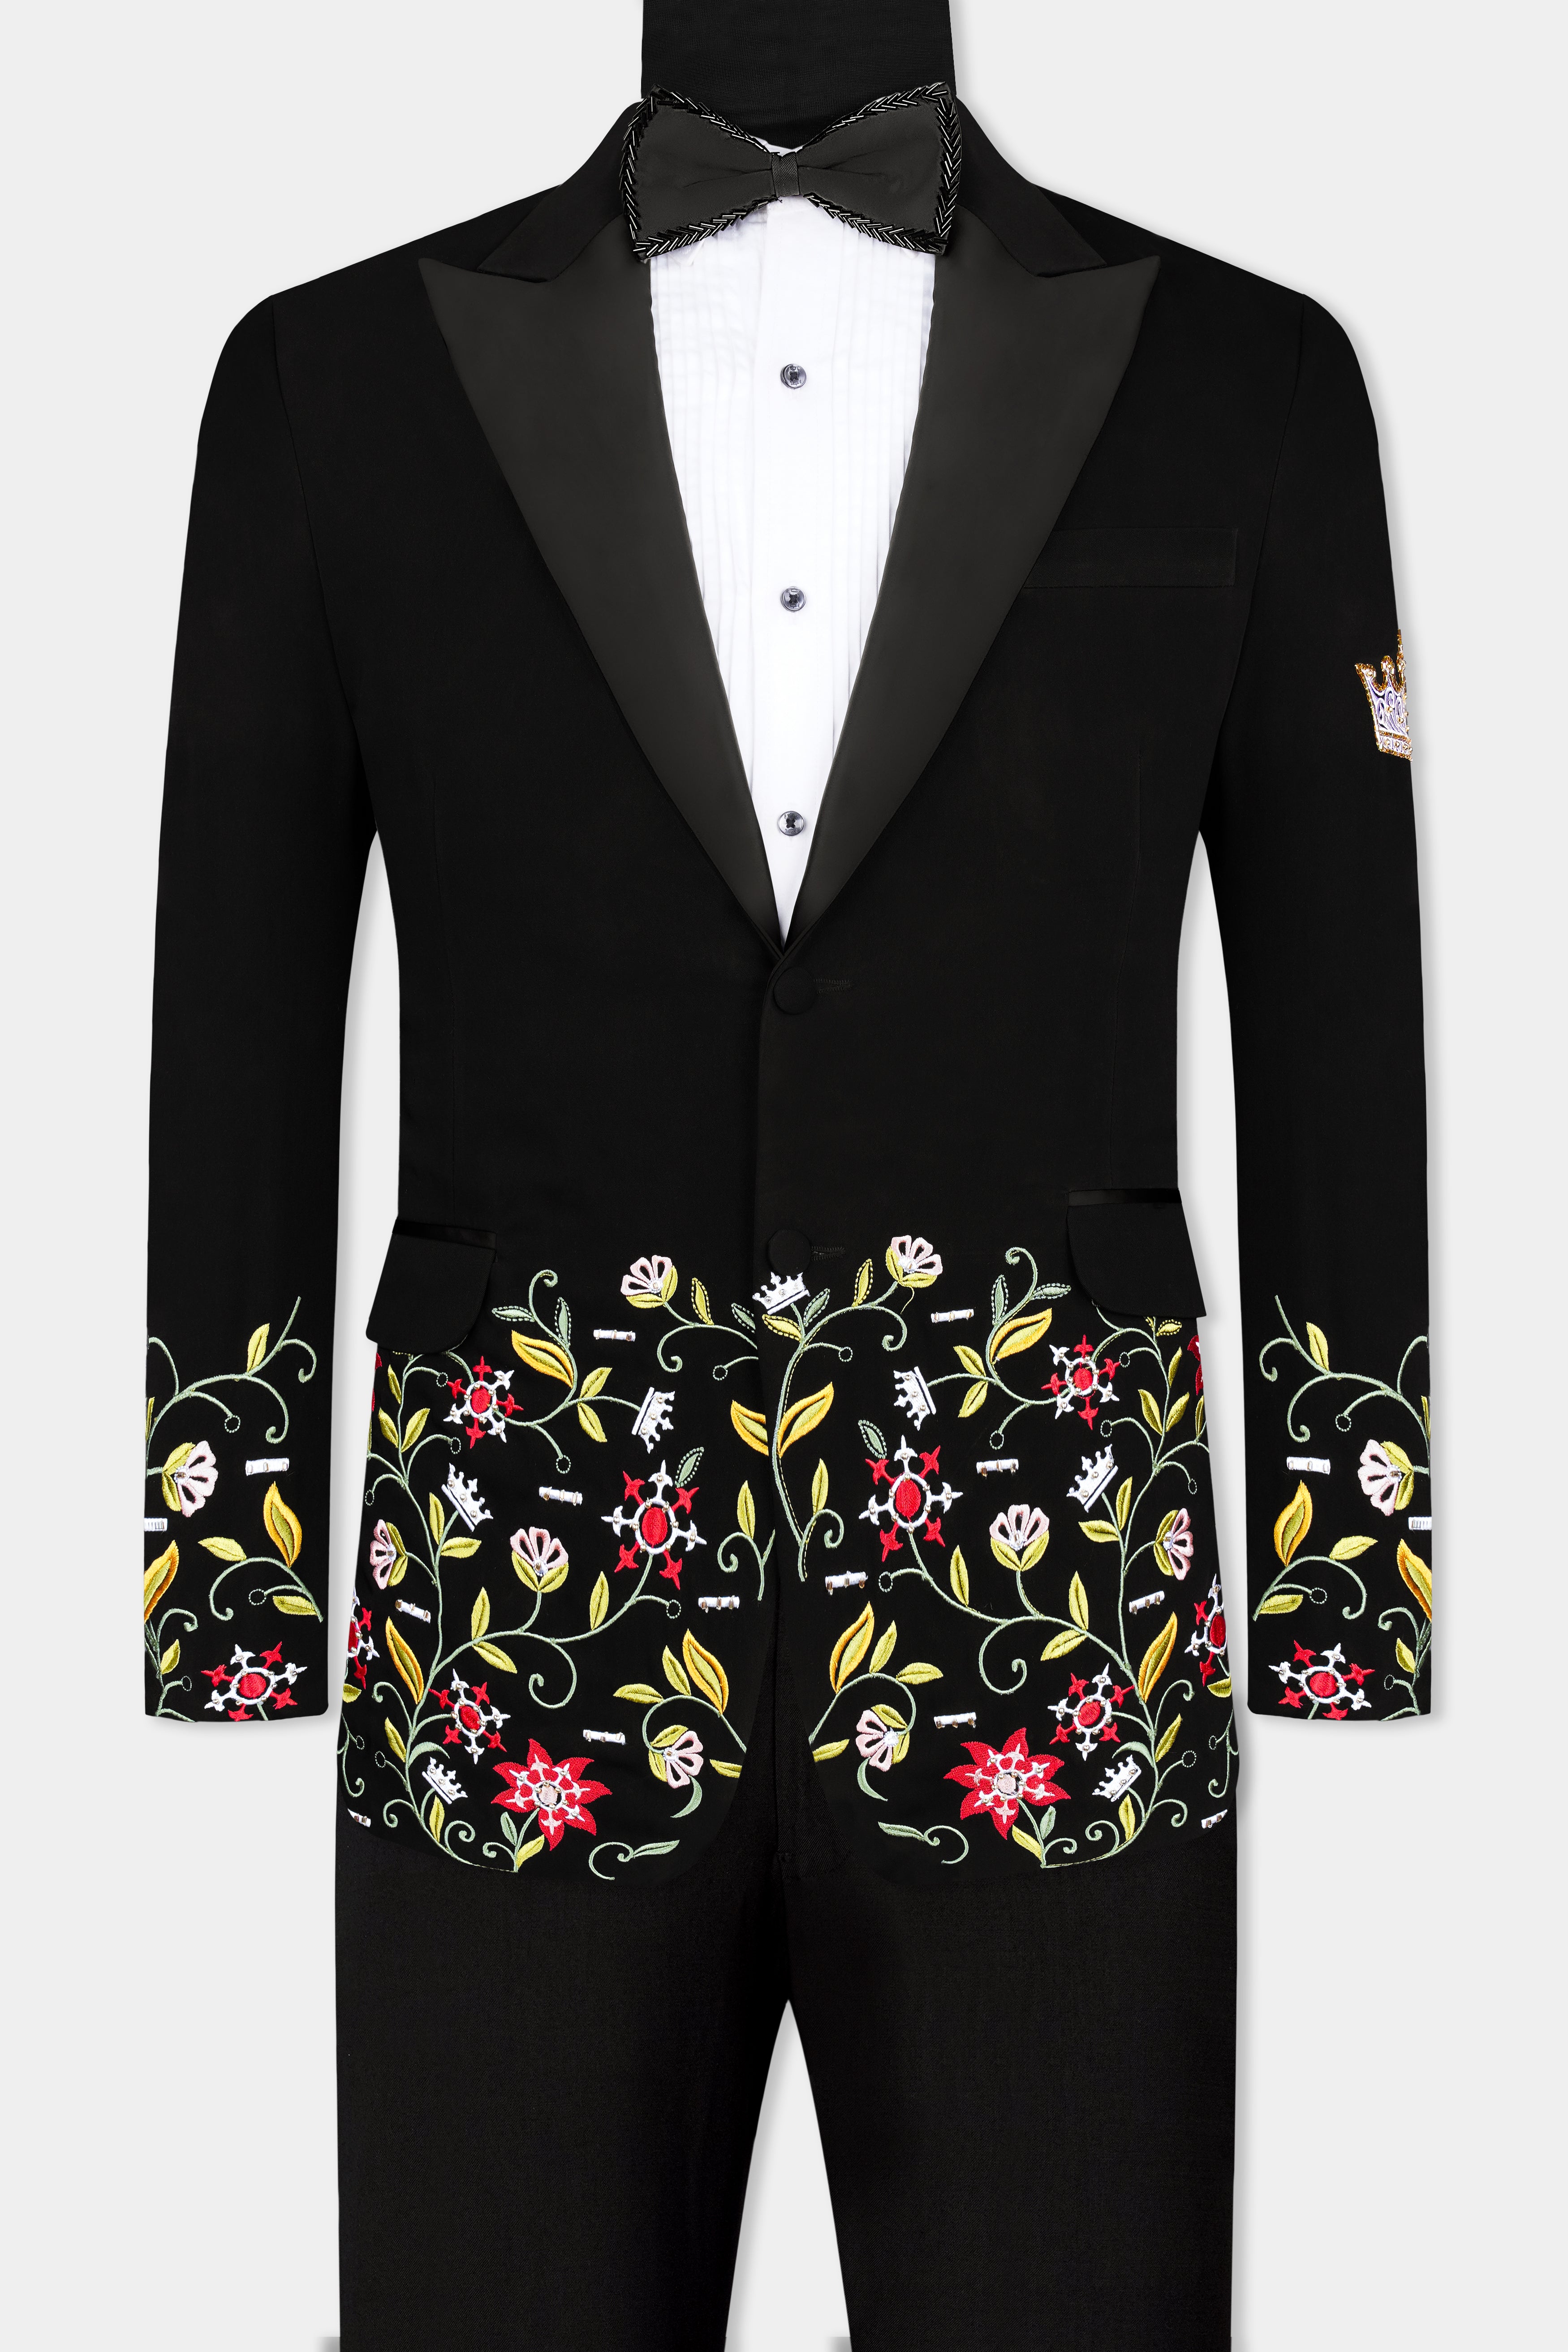 Buy Essential Black Suit for Men Online at Best Price in India – My Suit  Tailor